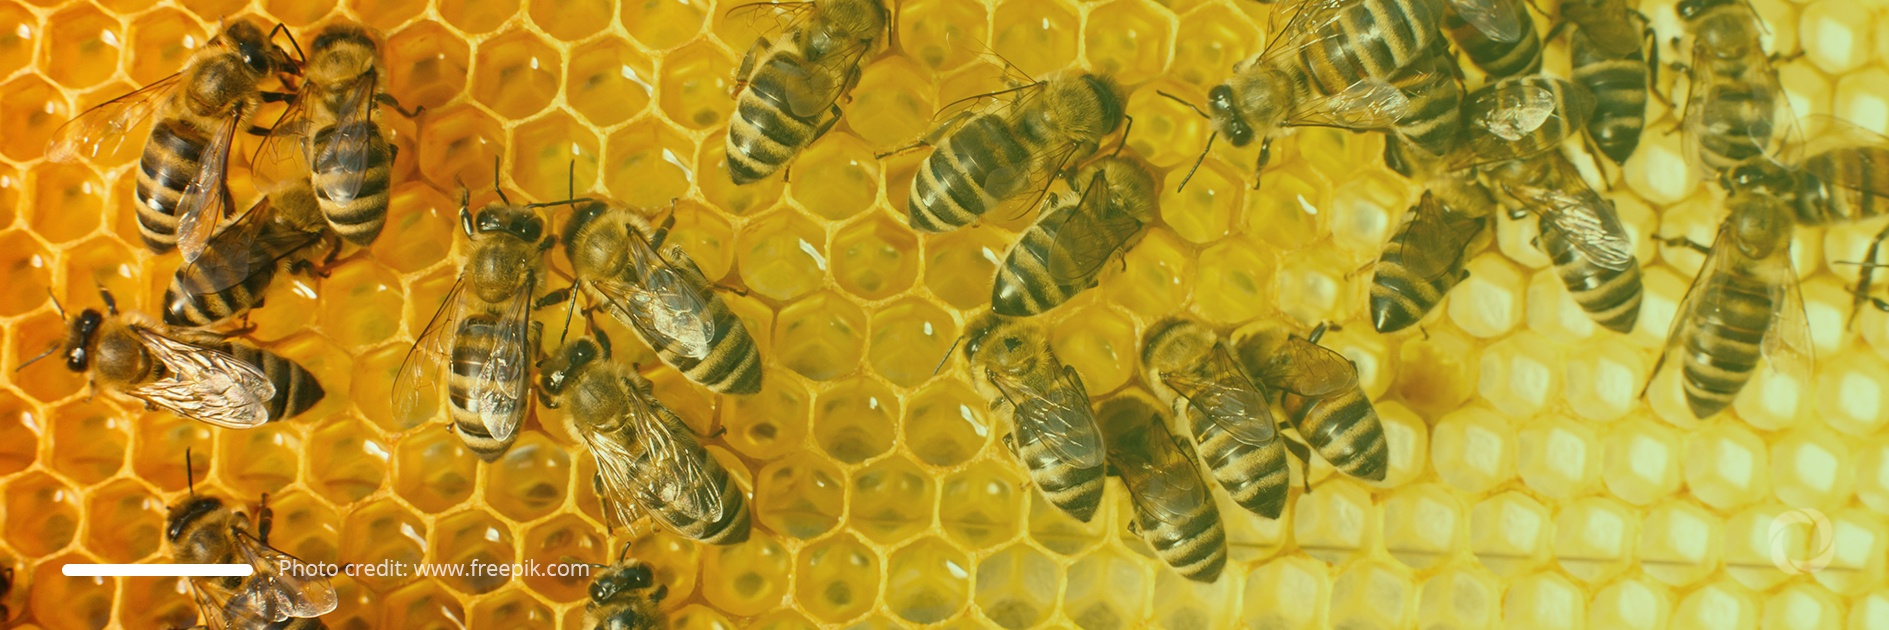 Efforts to increase crops threaten bee populations worldwide